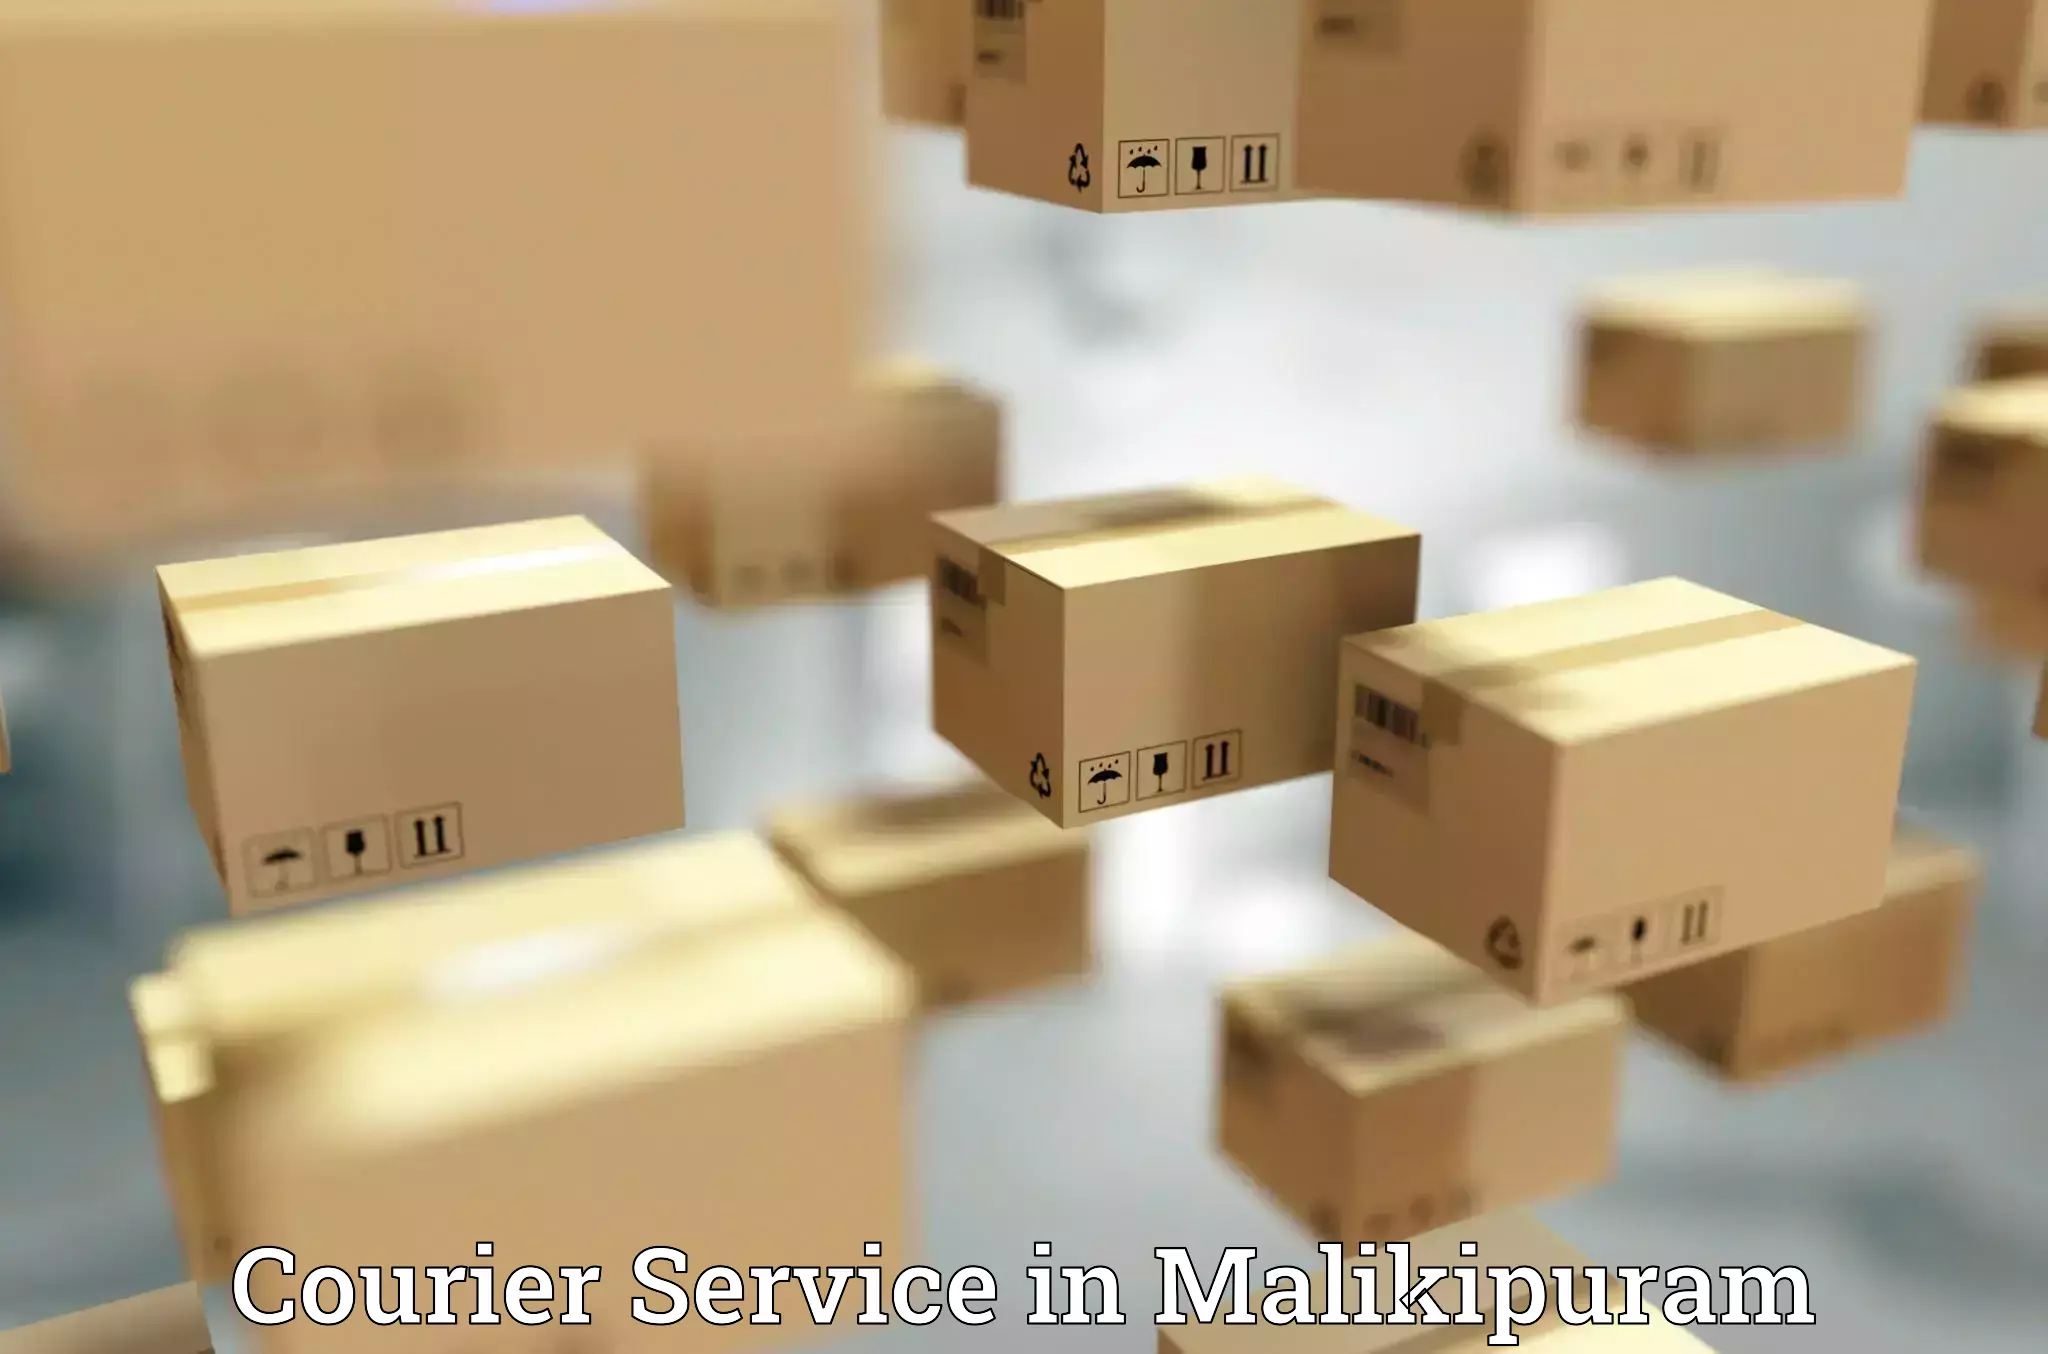 Optimized shipping routes in Malikipuram